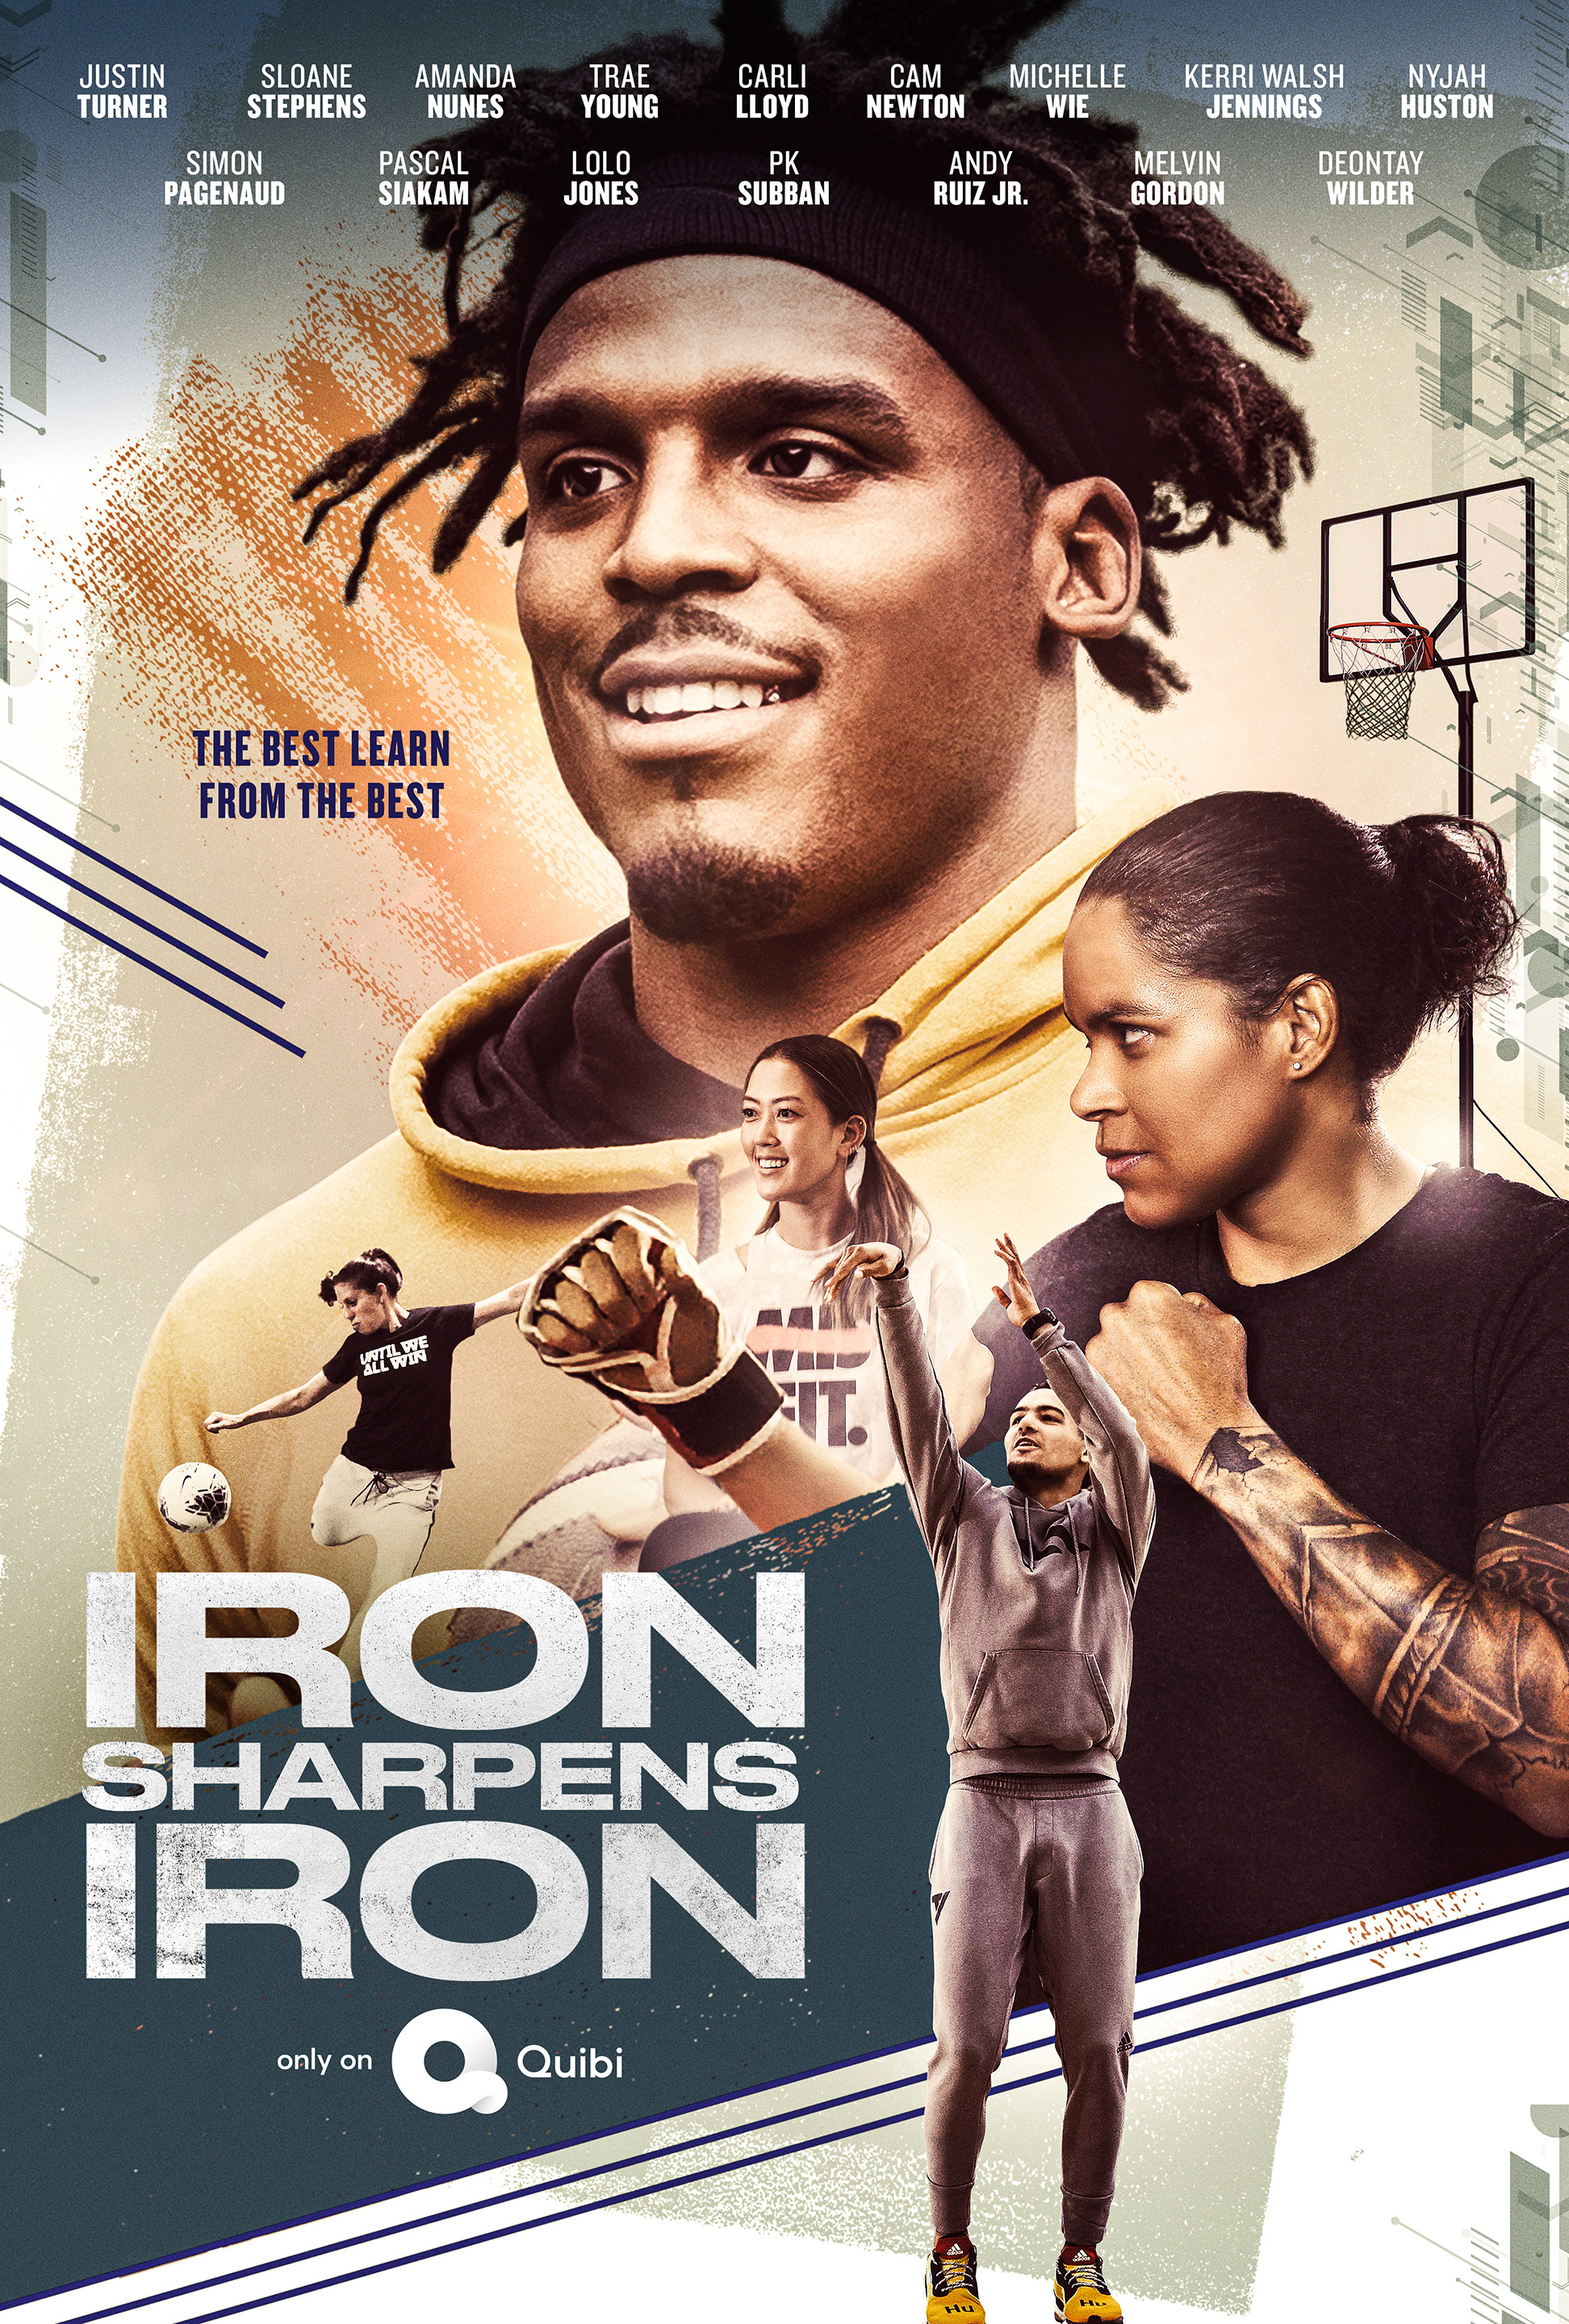 Mega Sized TV Poster Image for Iron Sharpens Iron 